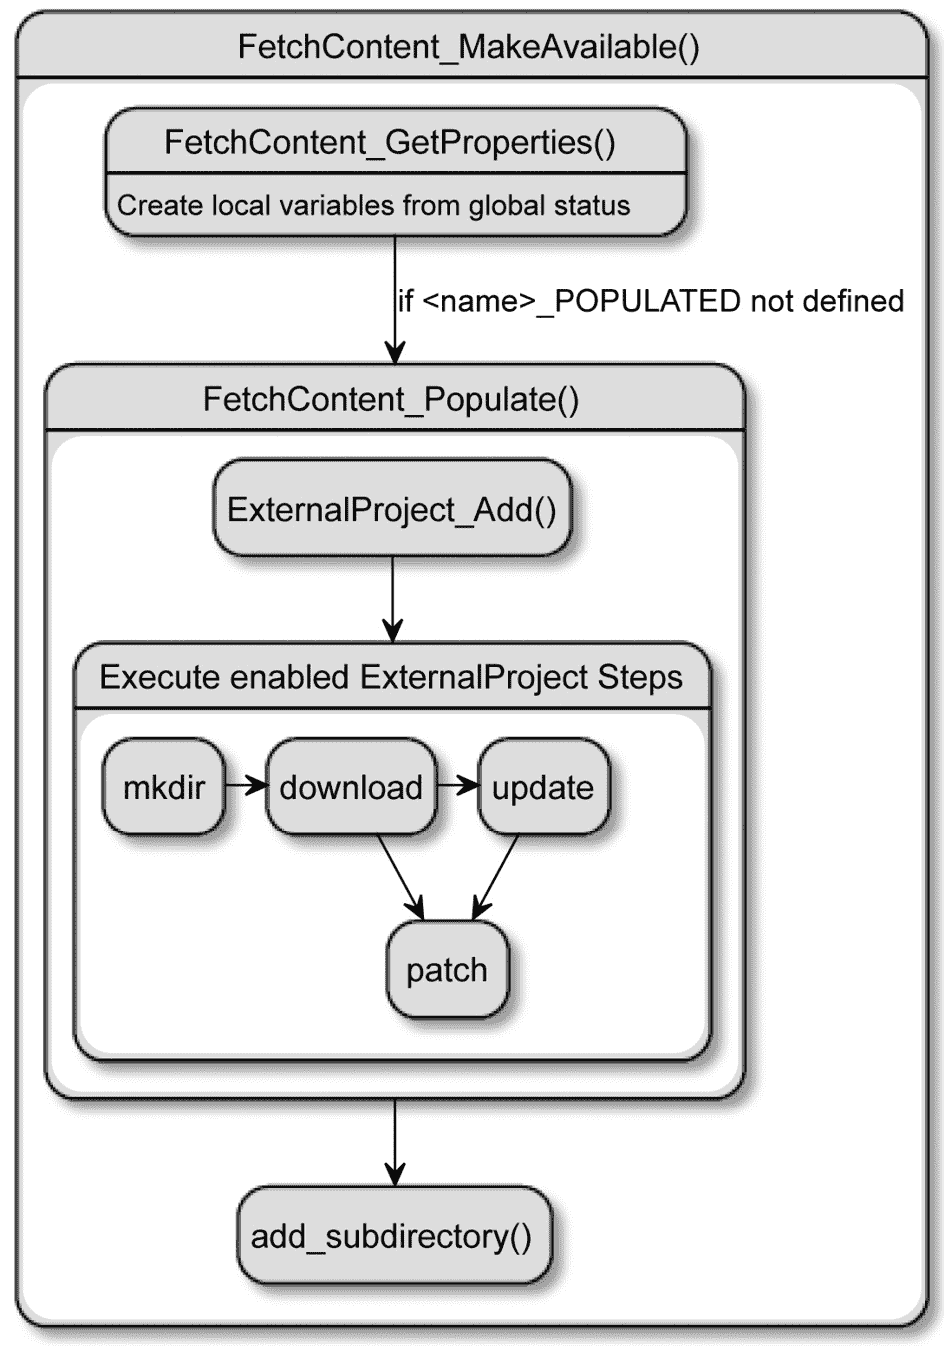 图 7.2 – FetchContent_MakeAvailable()如何包装对 ExternalProject 的调用